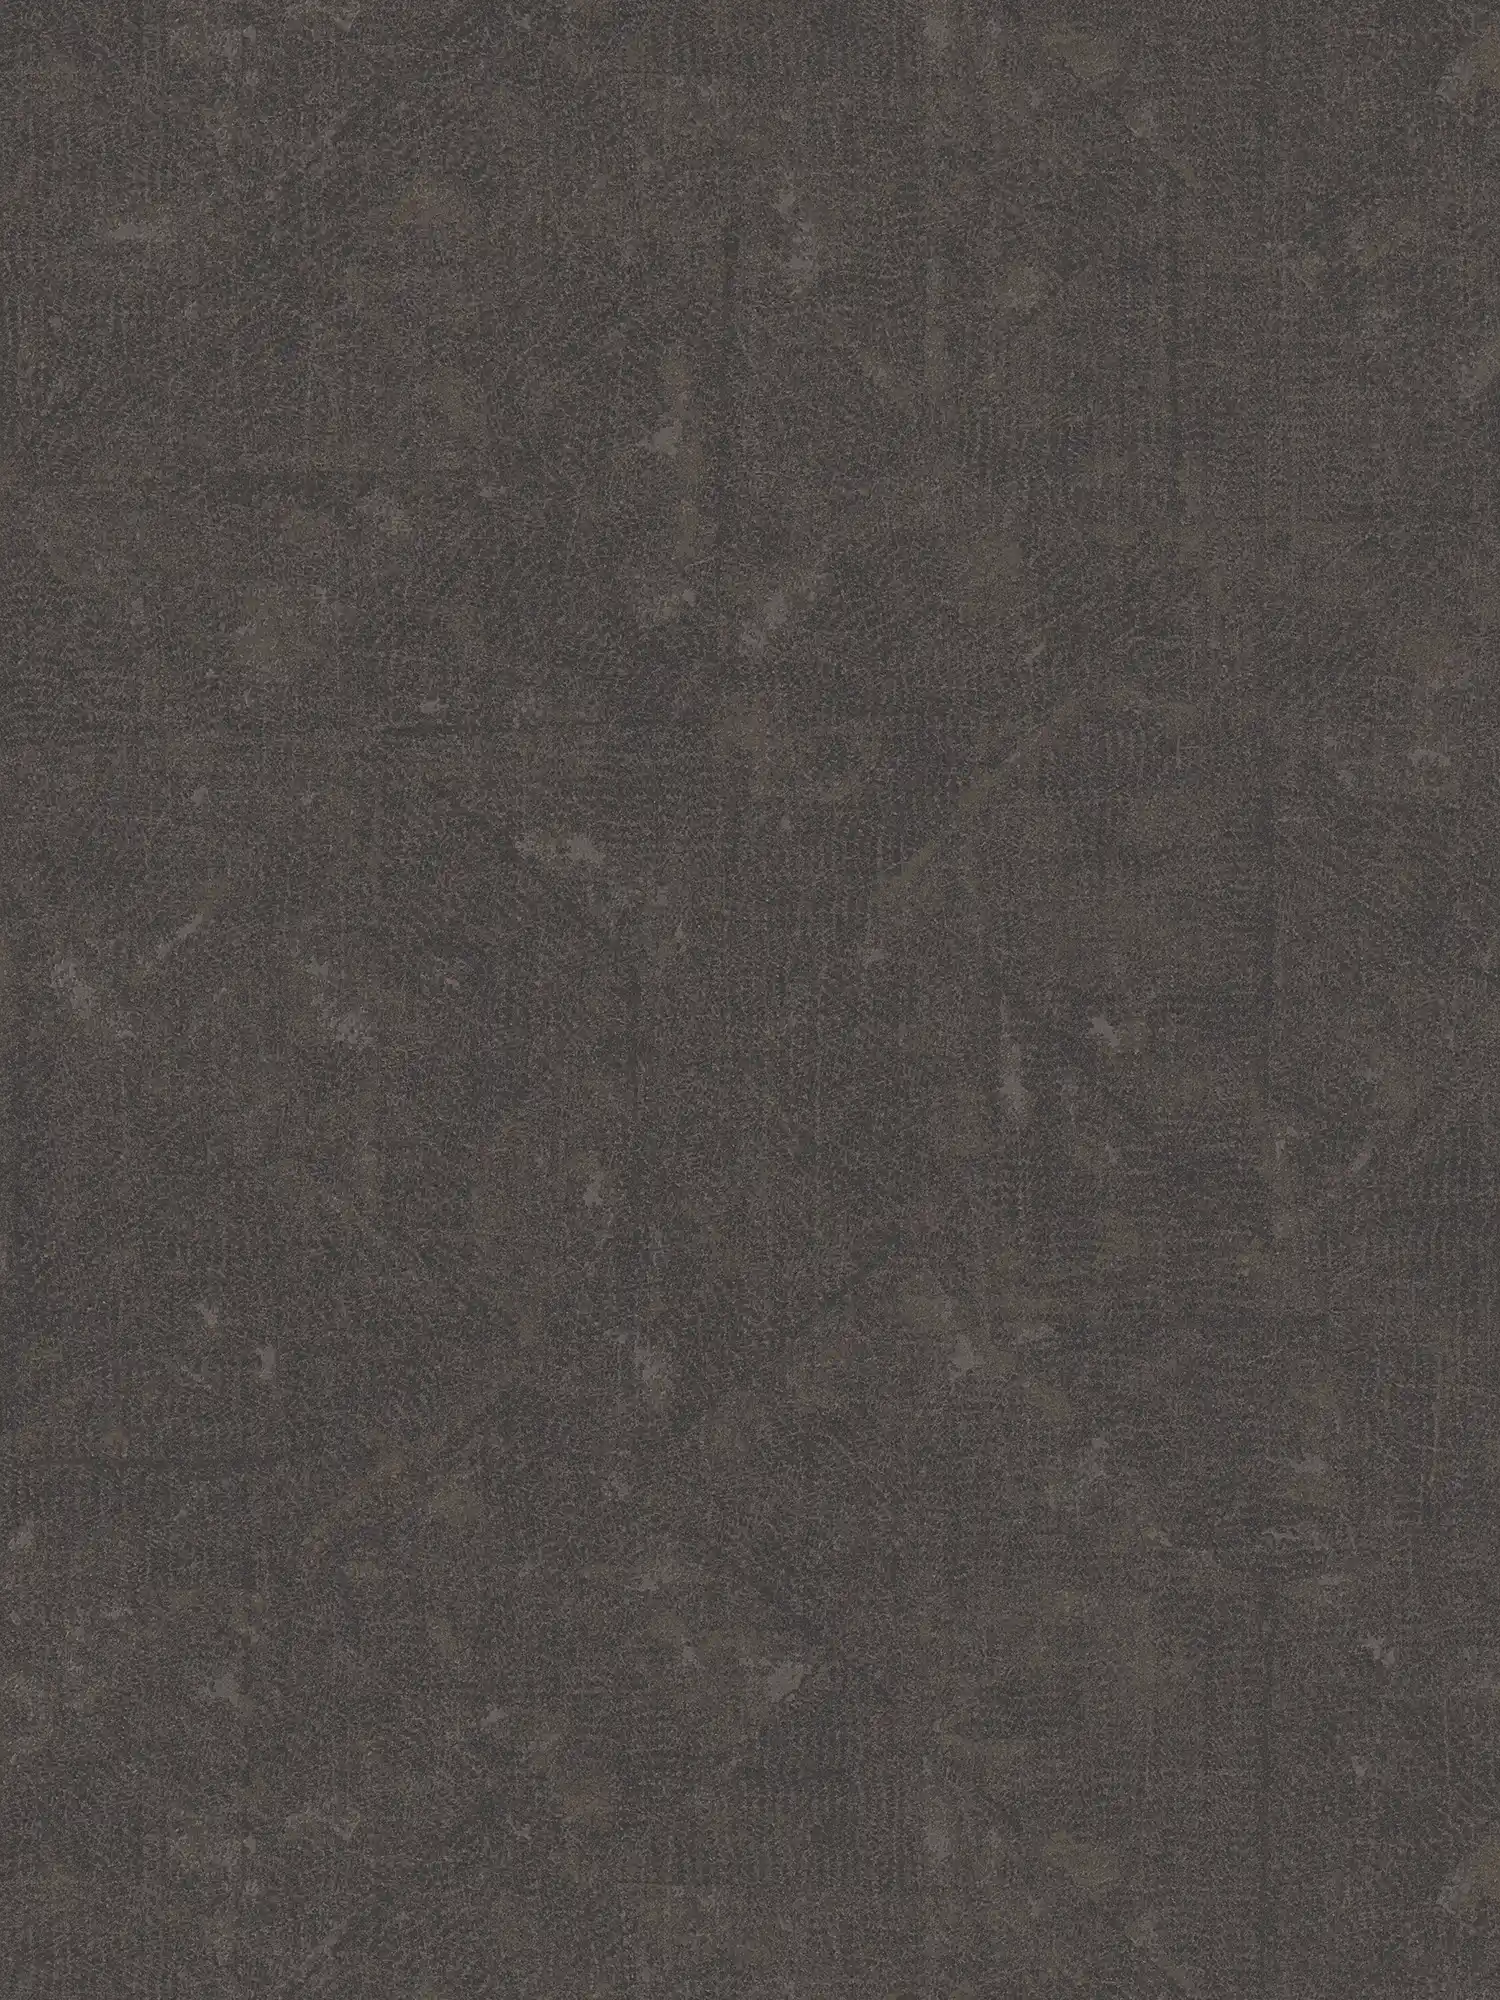 Dark brown non-woven wallpaper subtly patterned - brown, black, bronze
